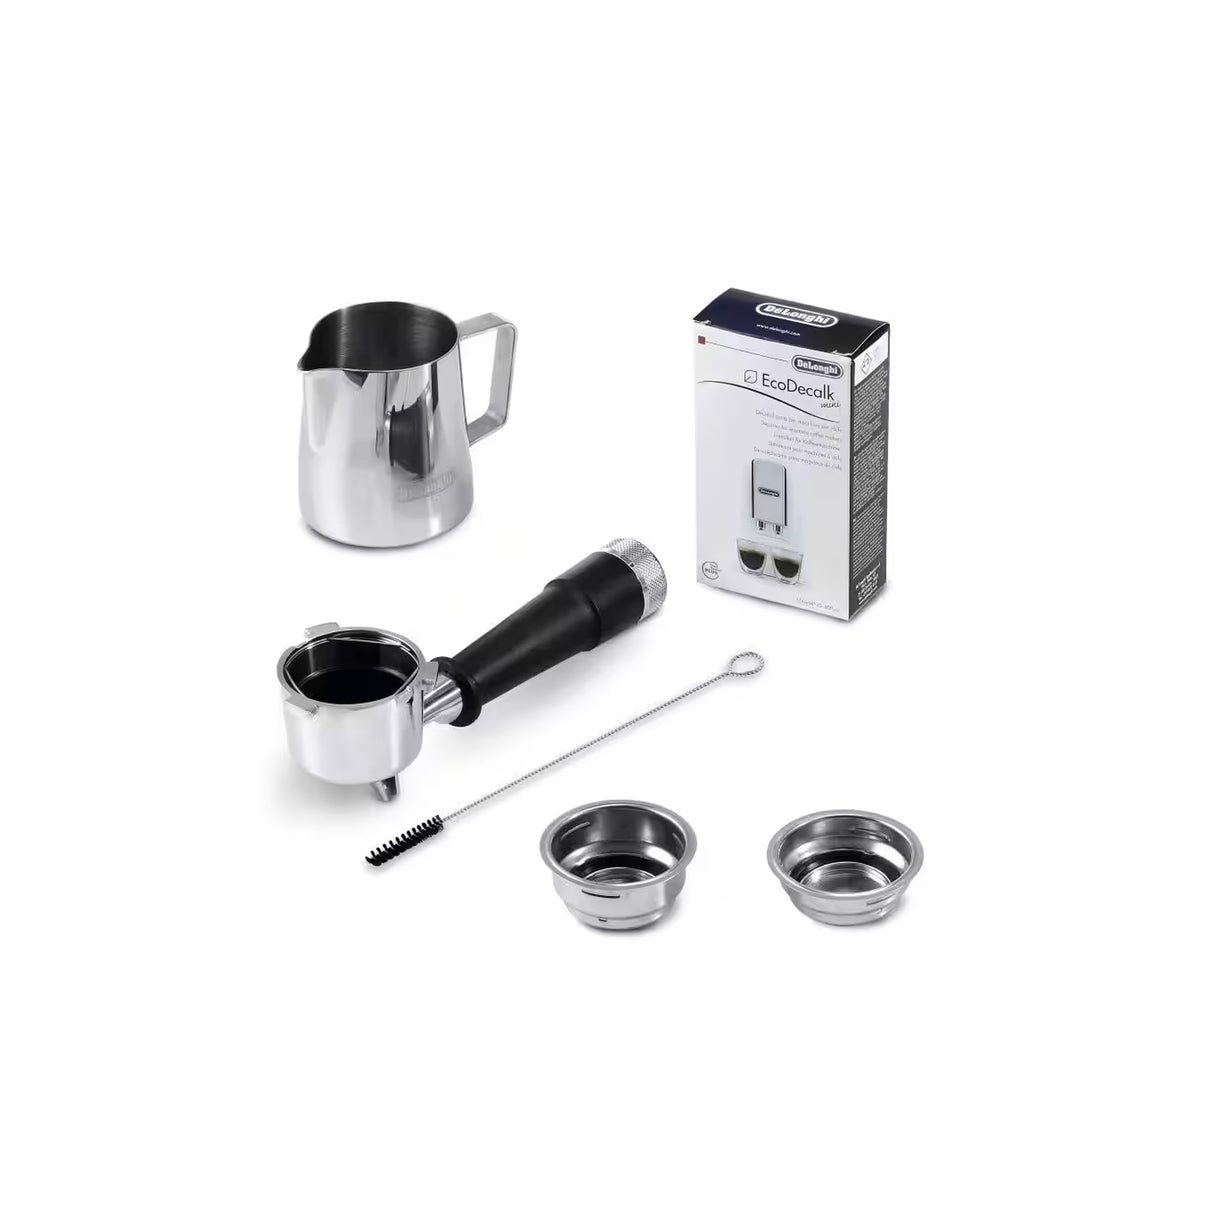 Delonghi EC9335.M - Pump Espresso Coffee Maker (Silver)